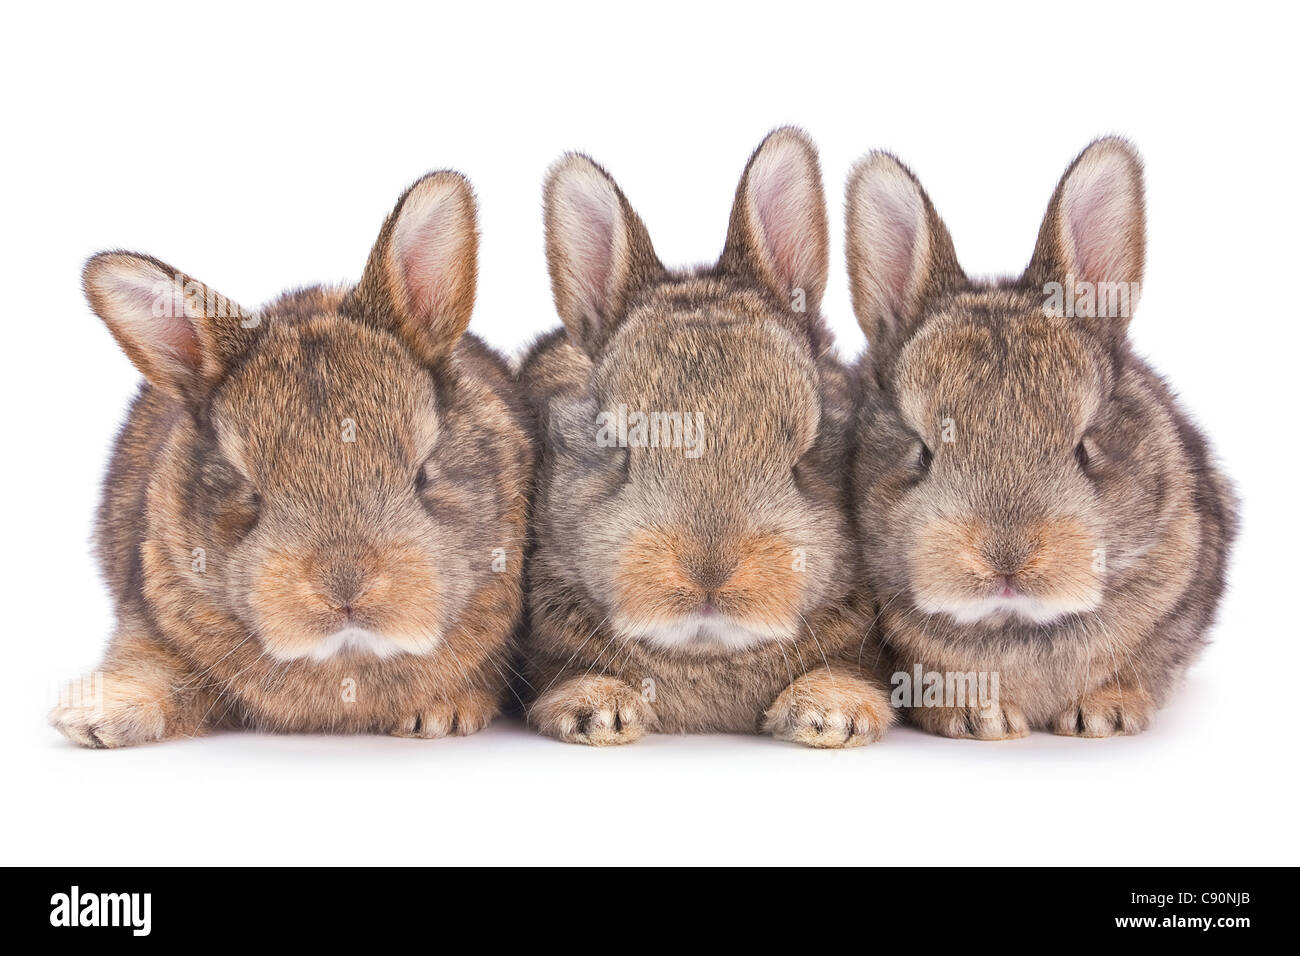 Three baby rabbit farm animal hi-res stock photography and images - Alamy